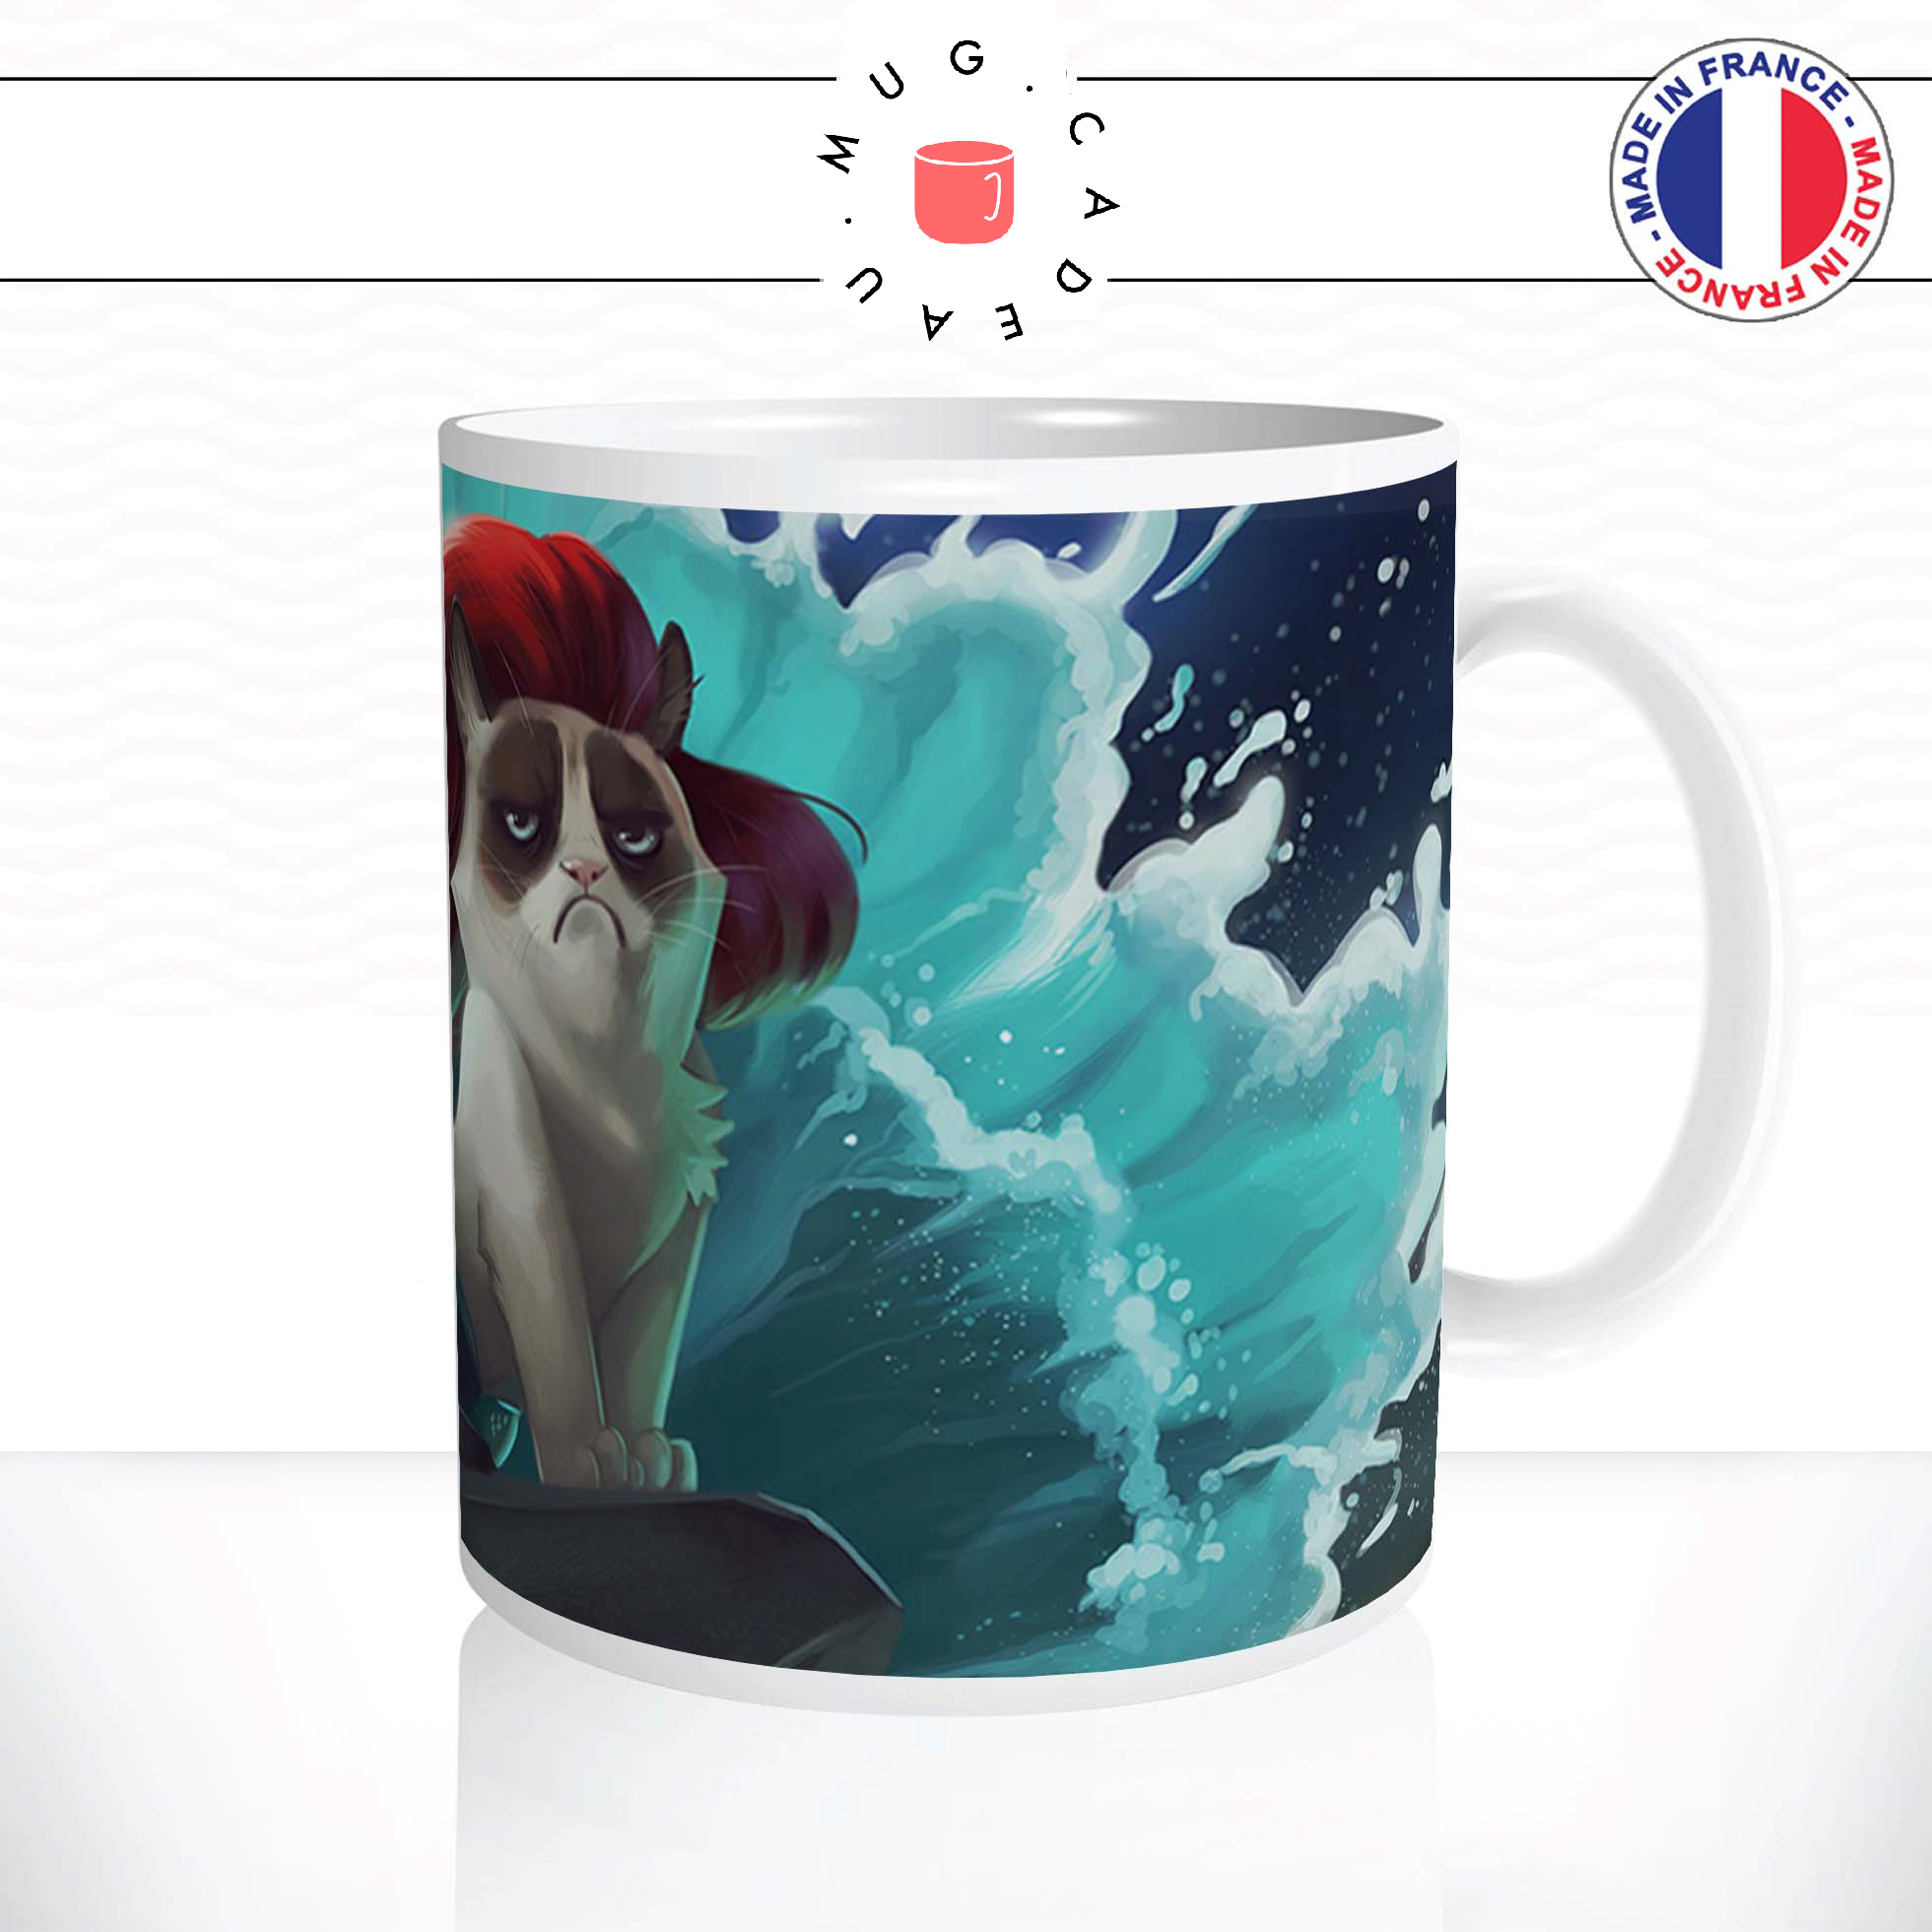 mug-tasse-ref12-chat-petite-sirene-parodie-drole-cafe-the-mugs-tasses-personnalise-anse-droite